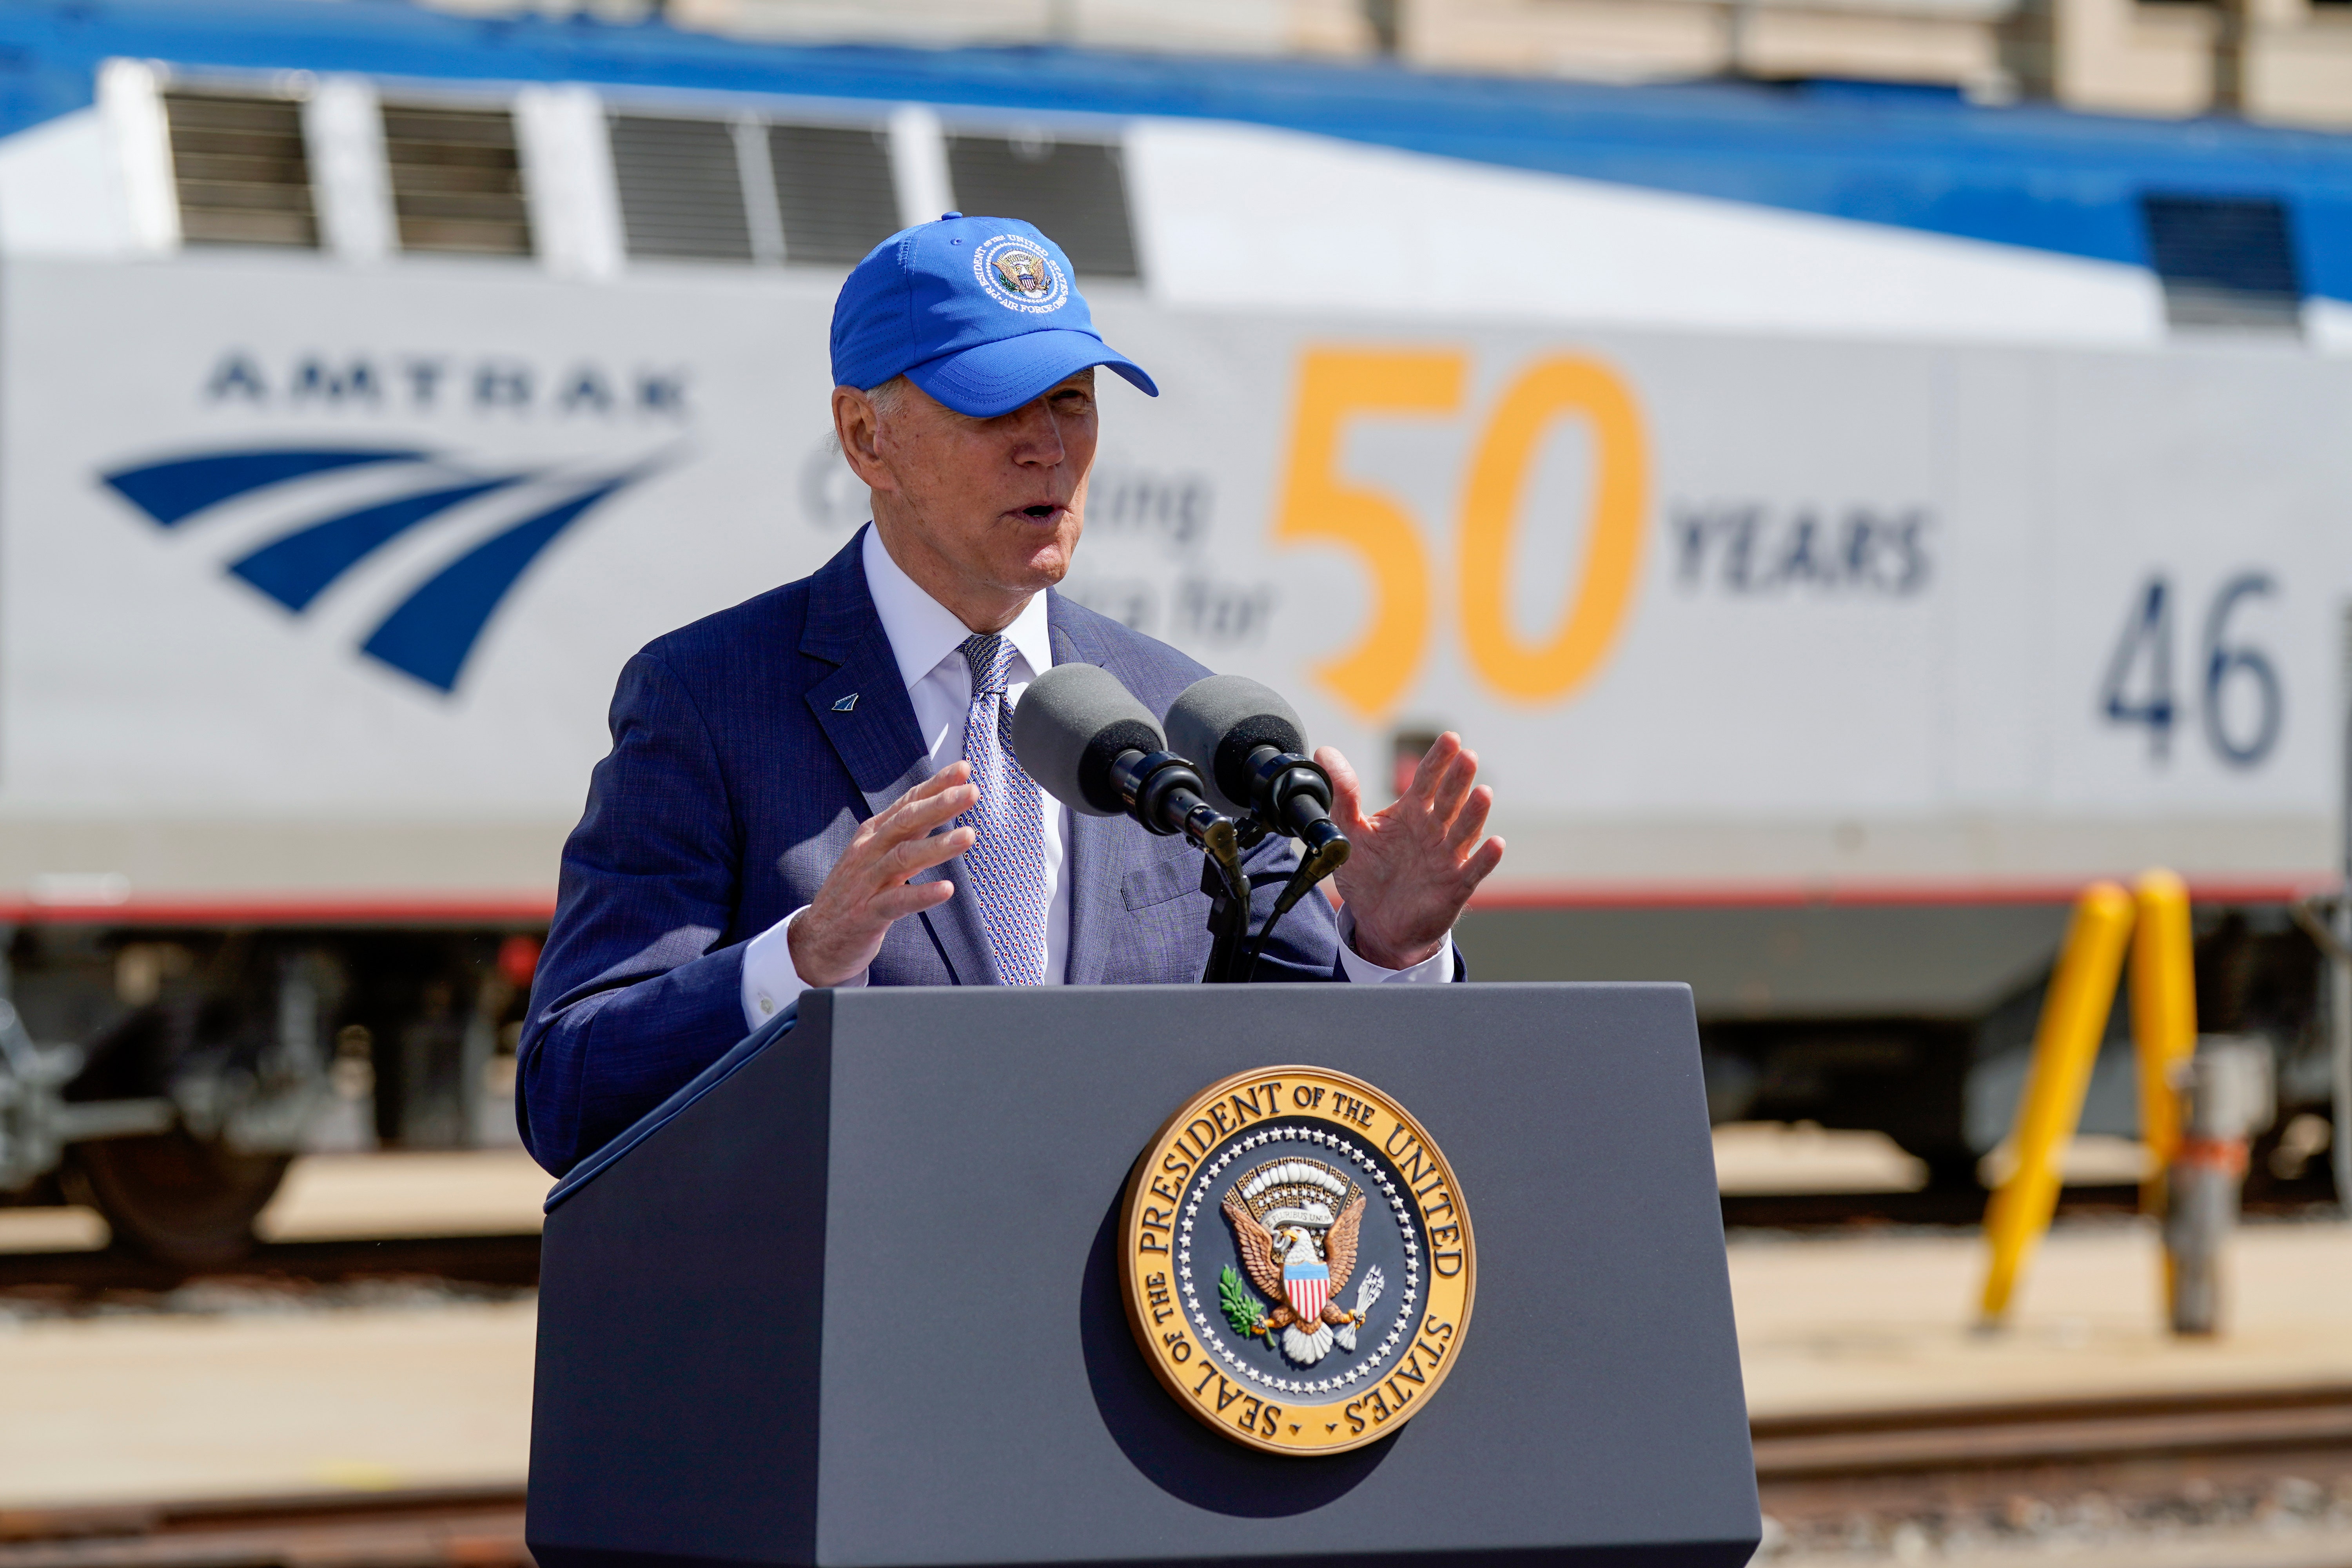 Biden's bizarre Amtrak story doesn't add up